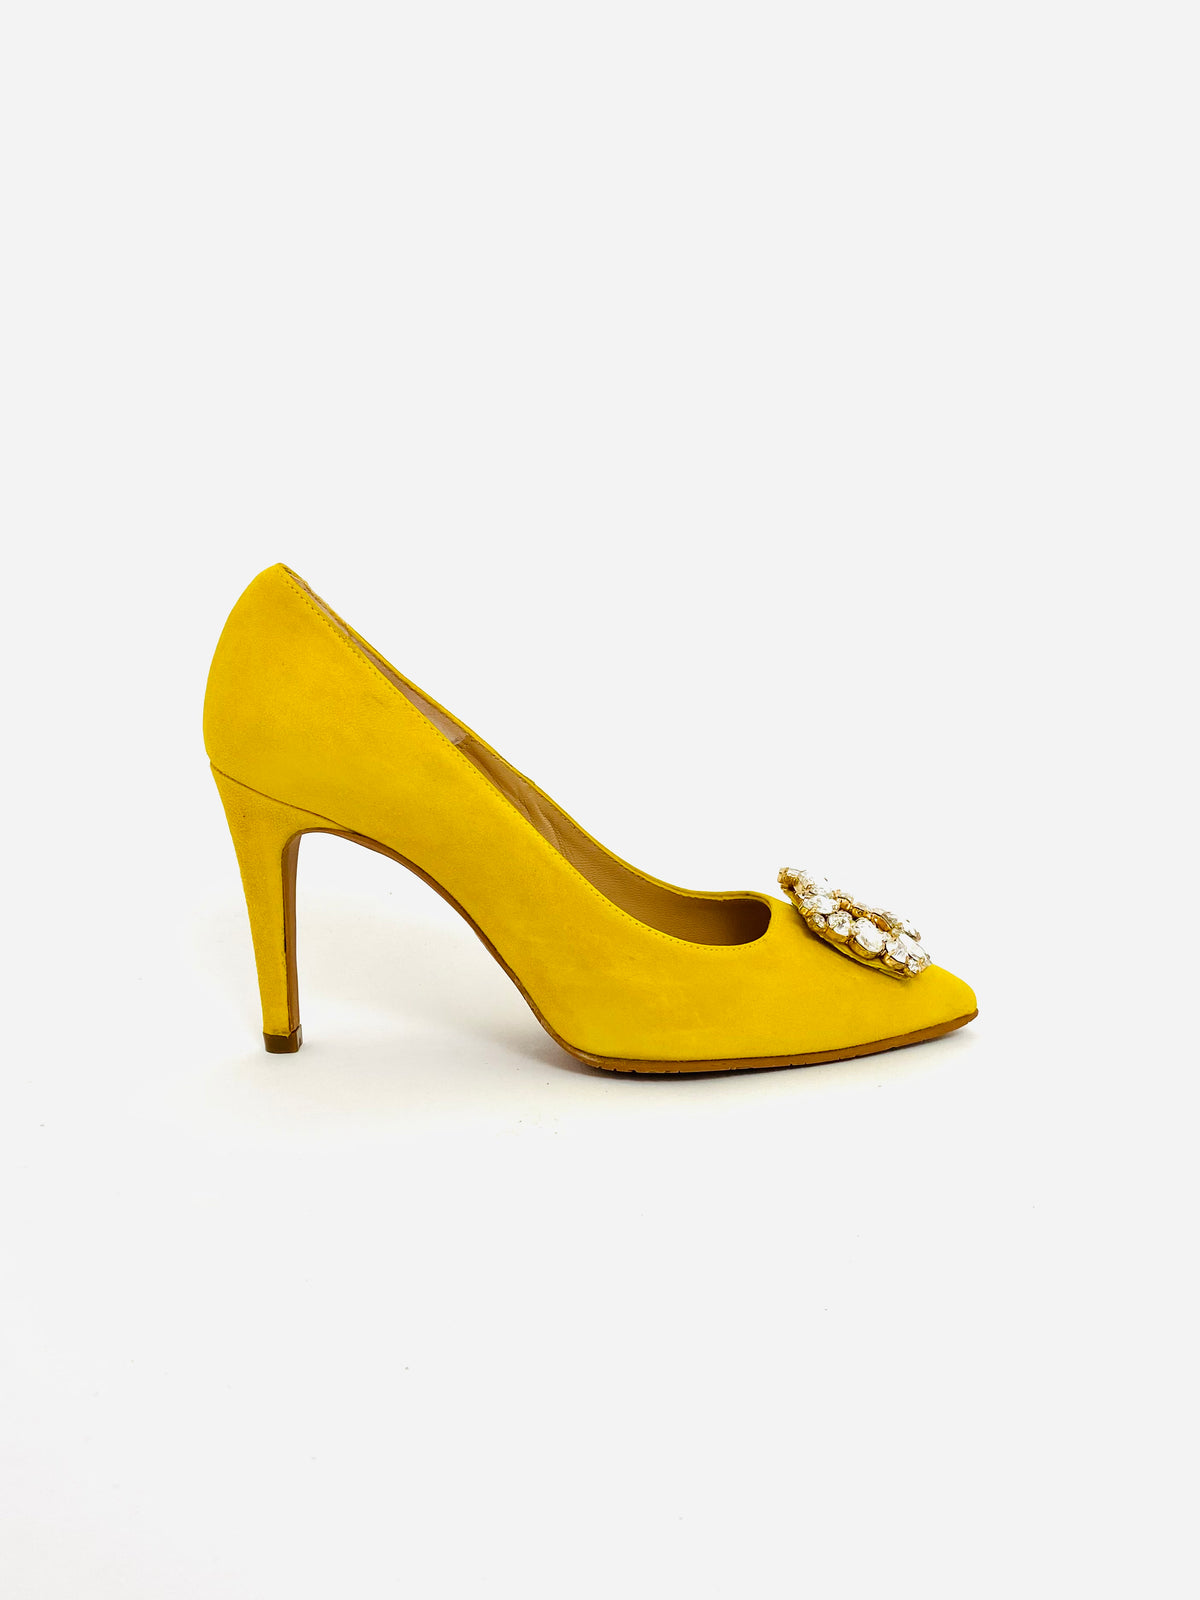 Rachels - Amarillo court shoe with diamonte